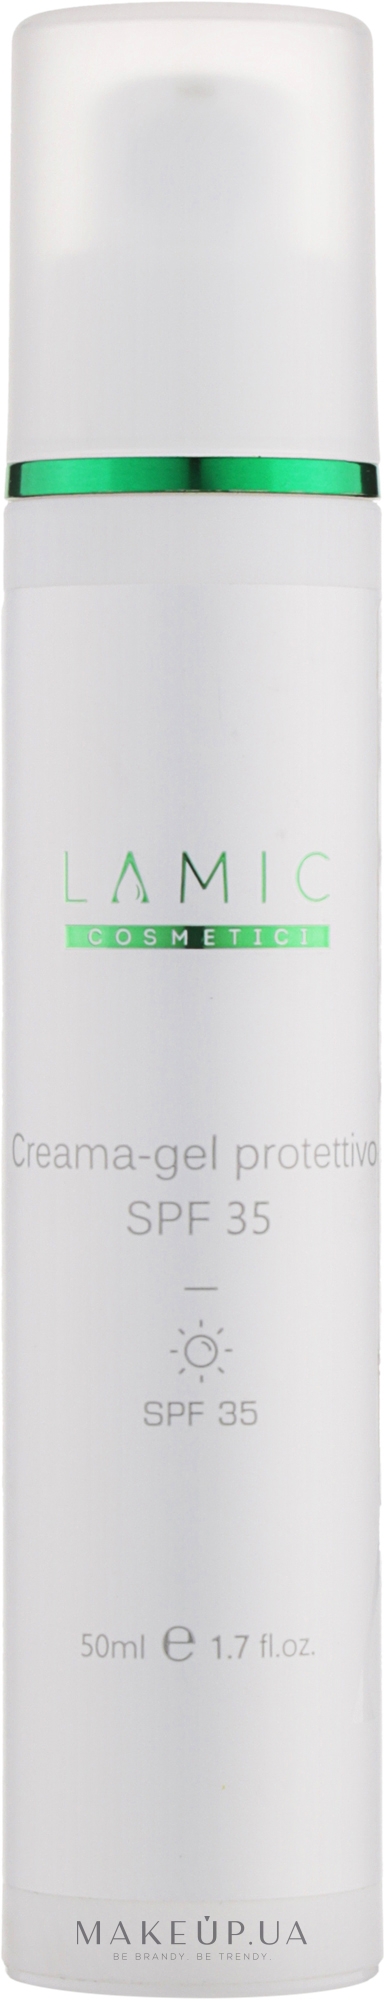 Захисний крем-гель для обличчя з SPF 35 - Lamic Cosmetici Creama-gel Protettivo — фото 50ml